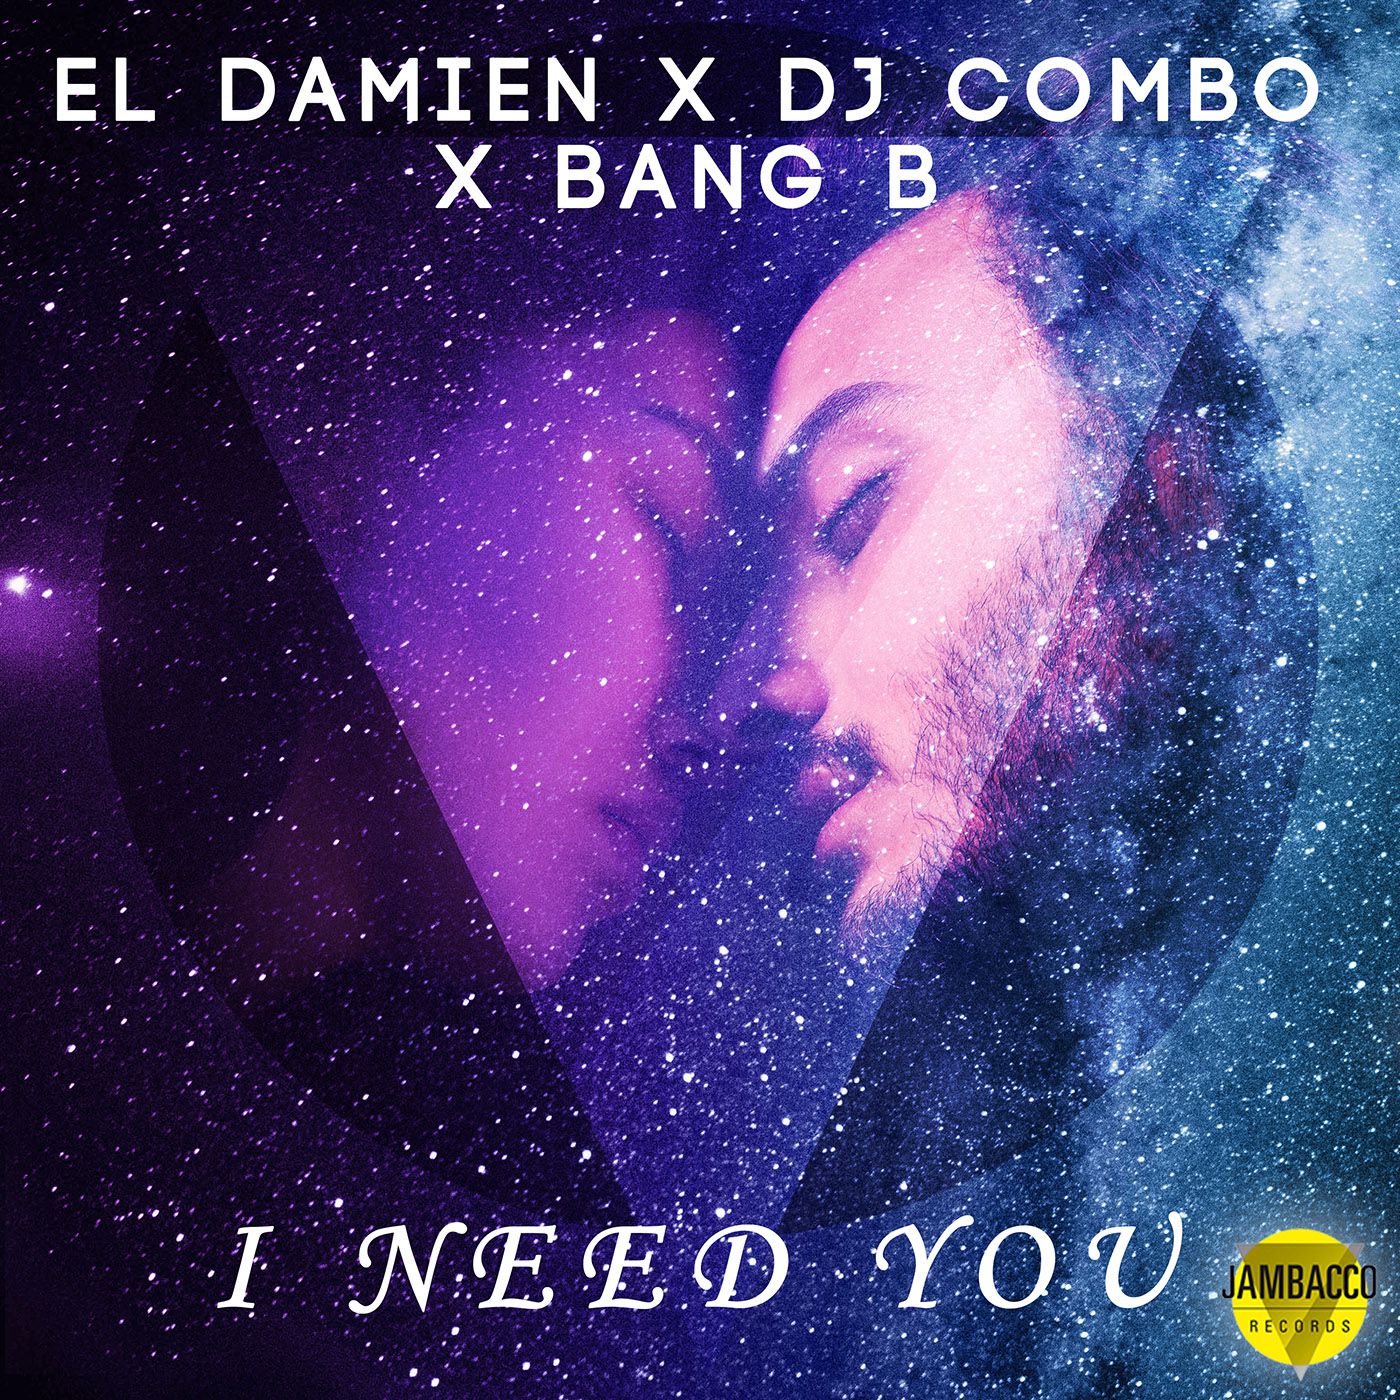 El DaMieN x DJ Combo x Bang B veröffentlichen neue Single